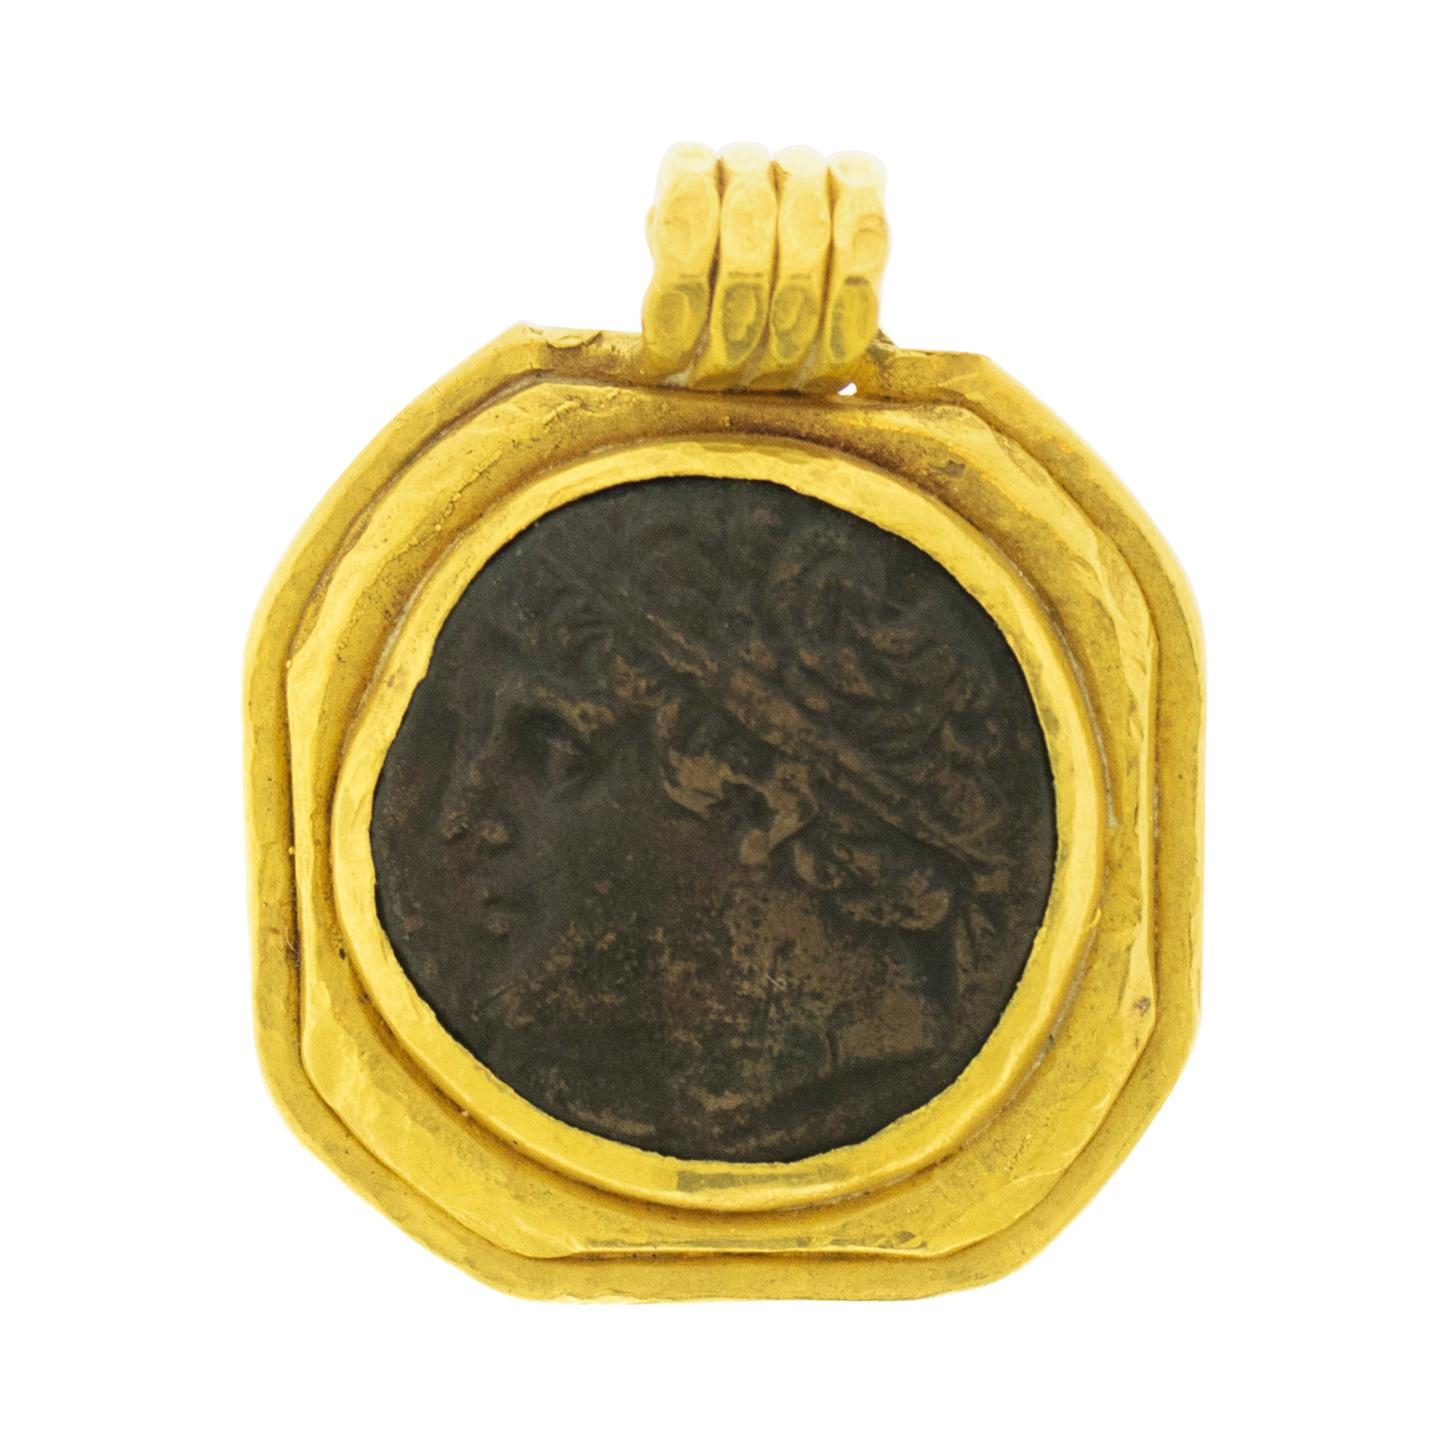 Ancient Coin Artifact Mounted in 22 Karat Gold Pendant